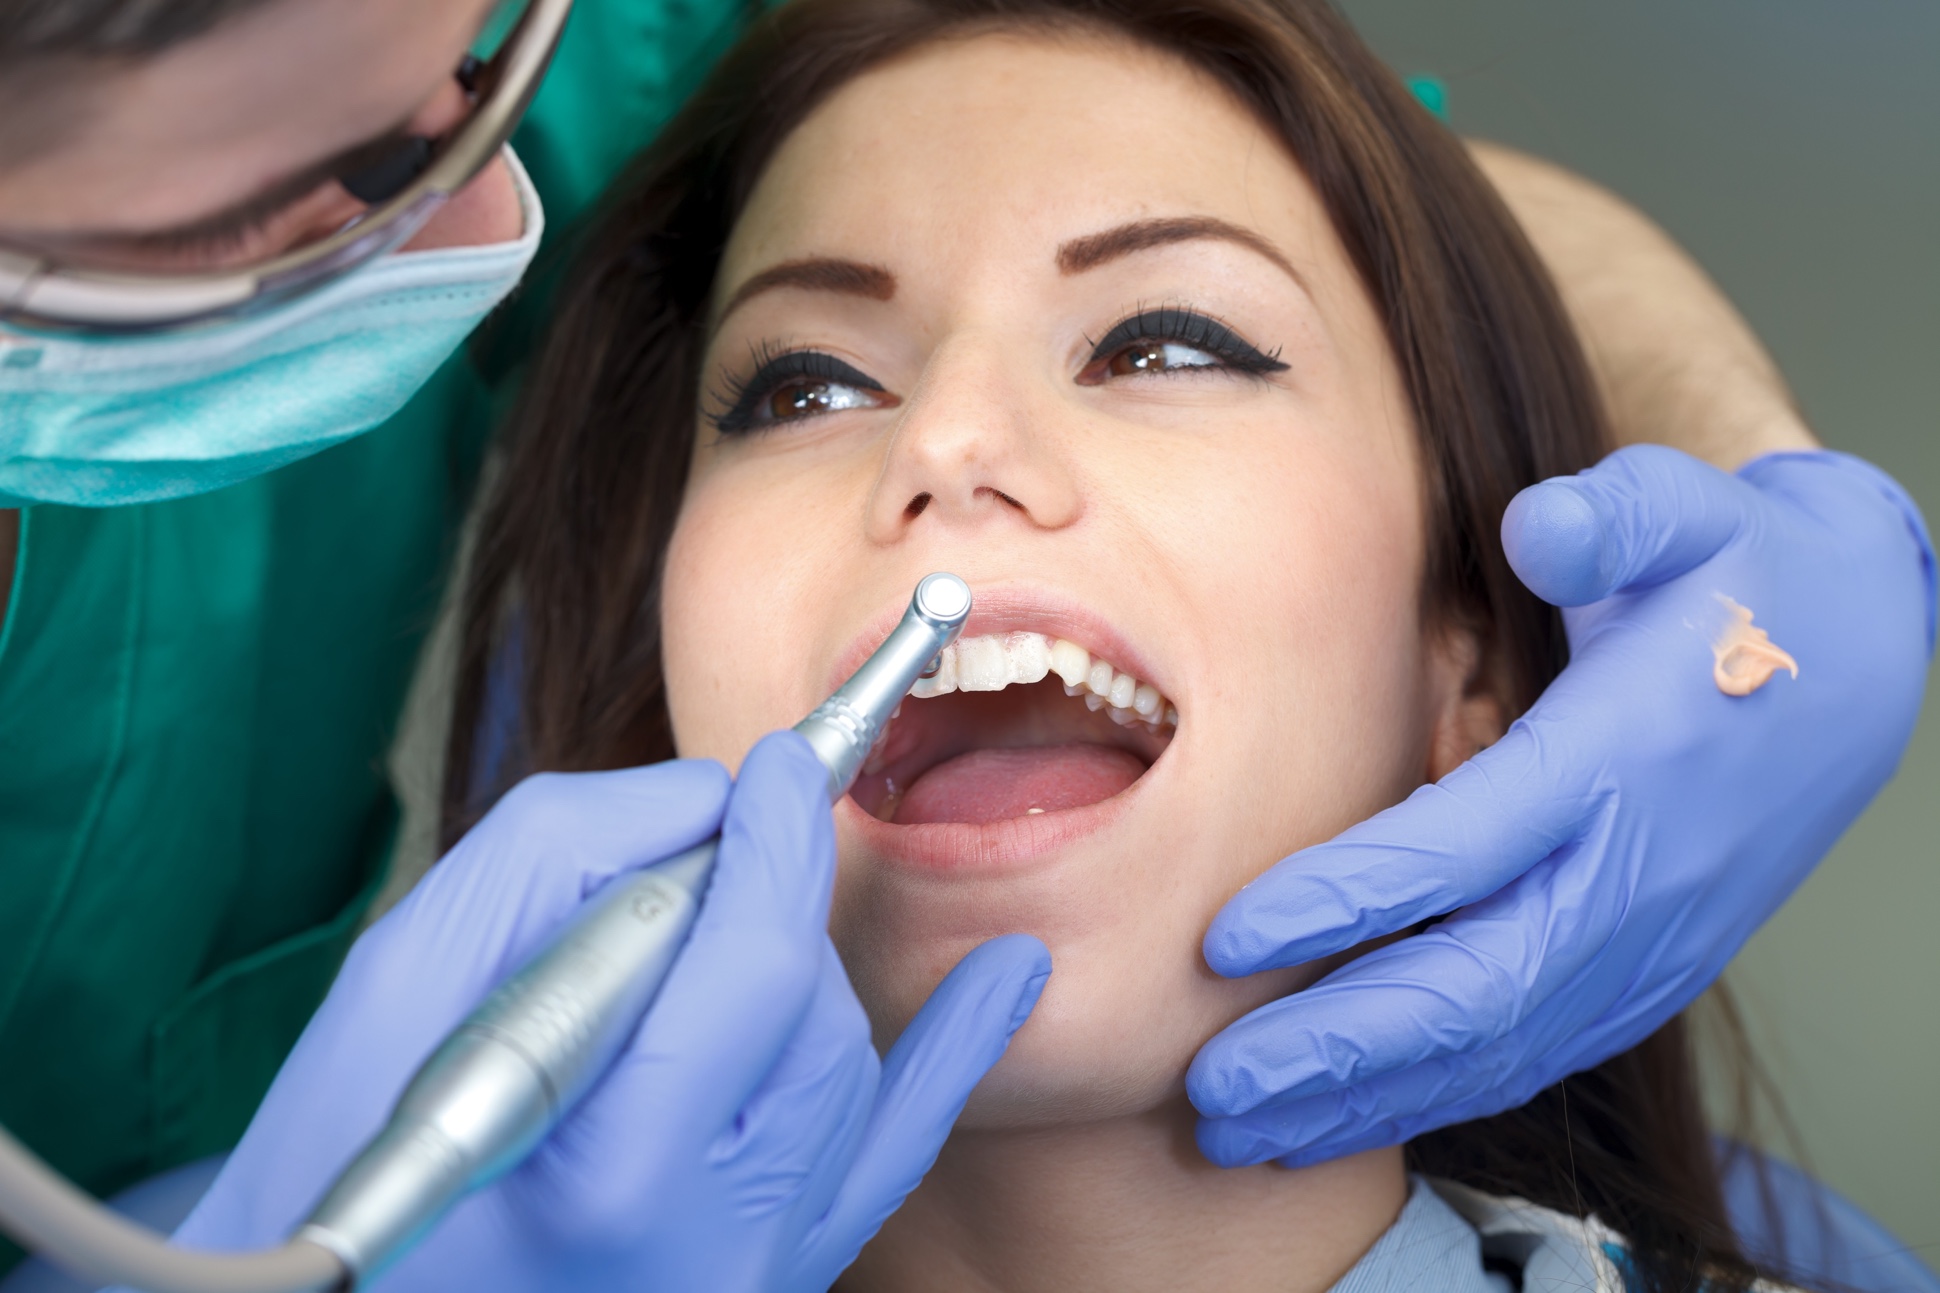 Teeth Cleaning Dental Services - Honolulu Dentist - Ala Moana - Kakaako -  Waikiki Hawaii - Honolulu Dentist - Dr. Declan Devereux Ala Moana Dental  Care